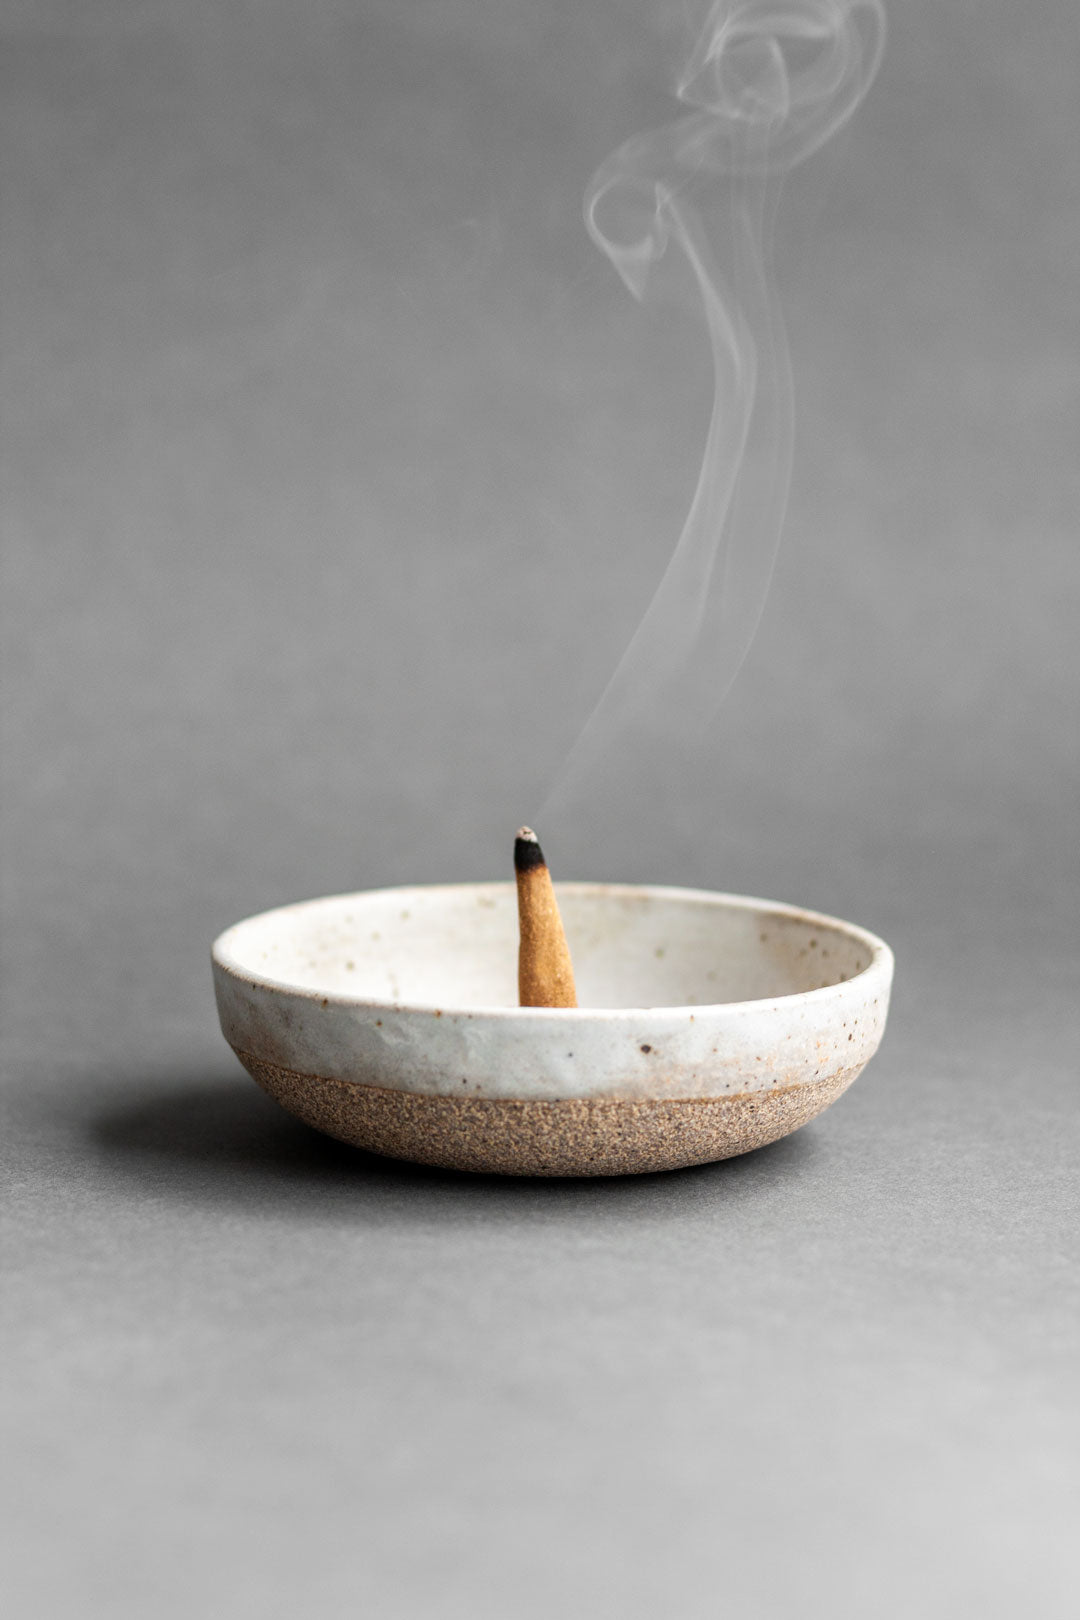 Hana-koh incense burning on a Colleen Hennessey ceramic dish.